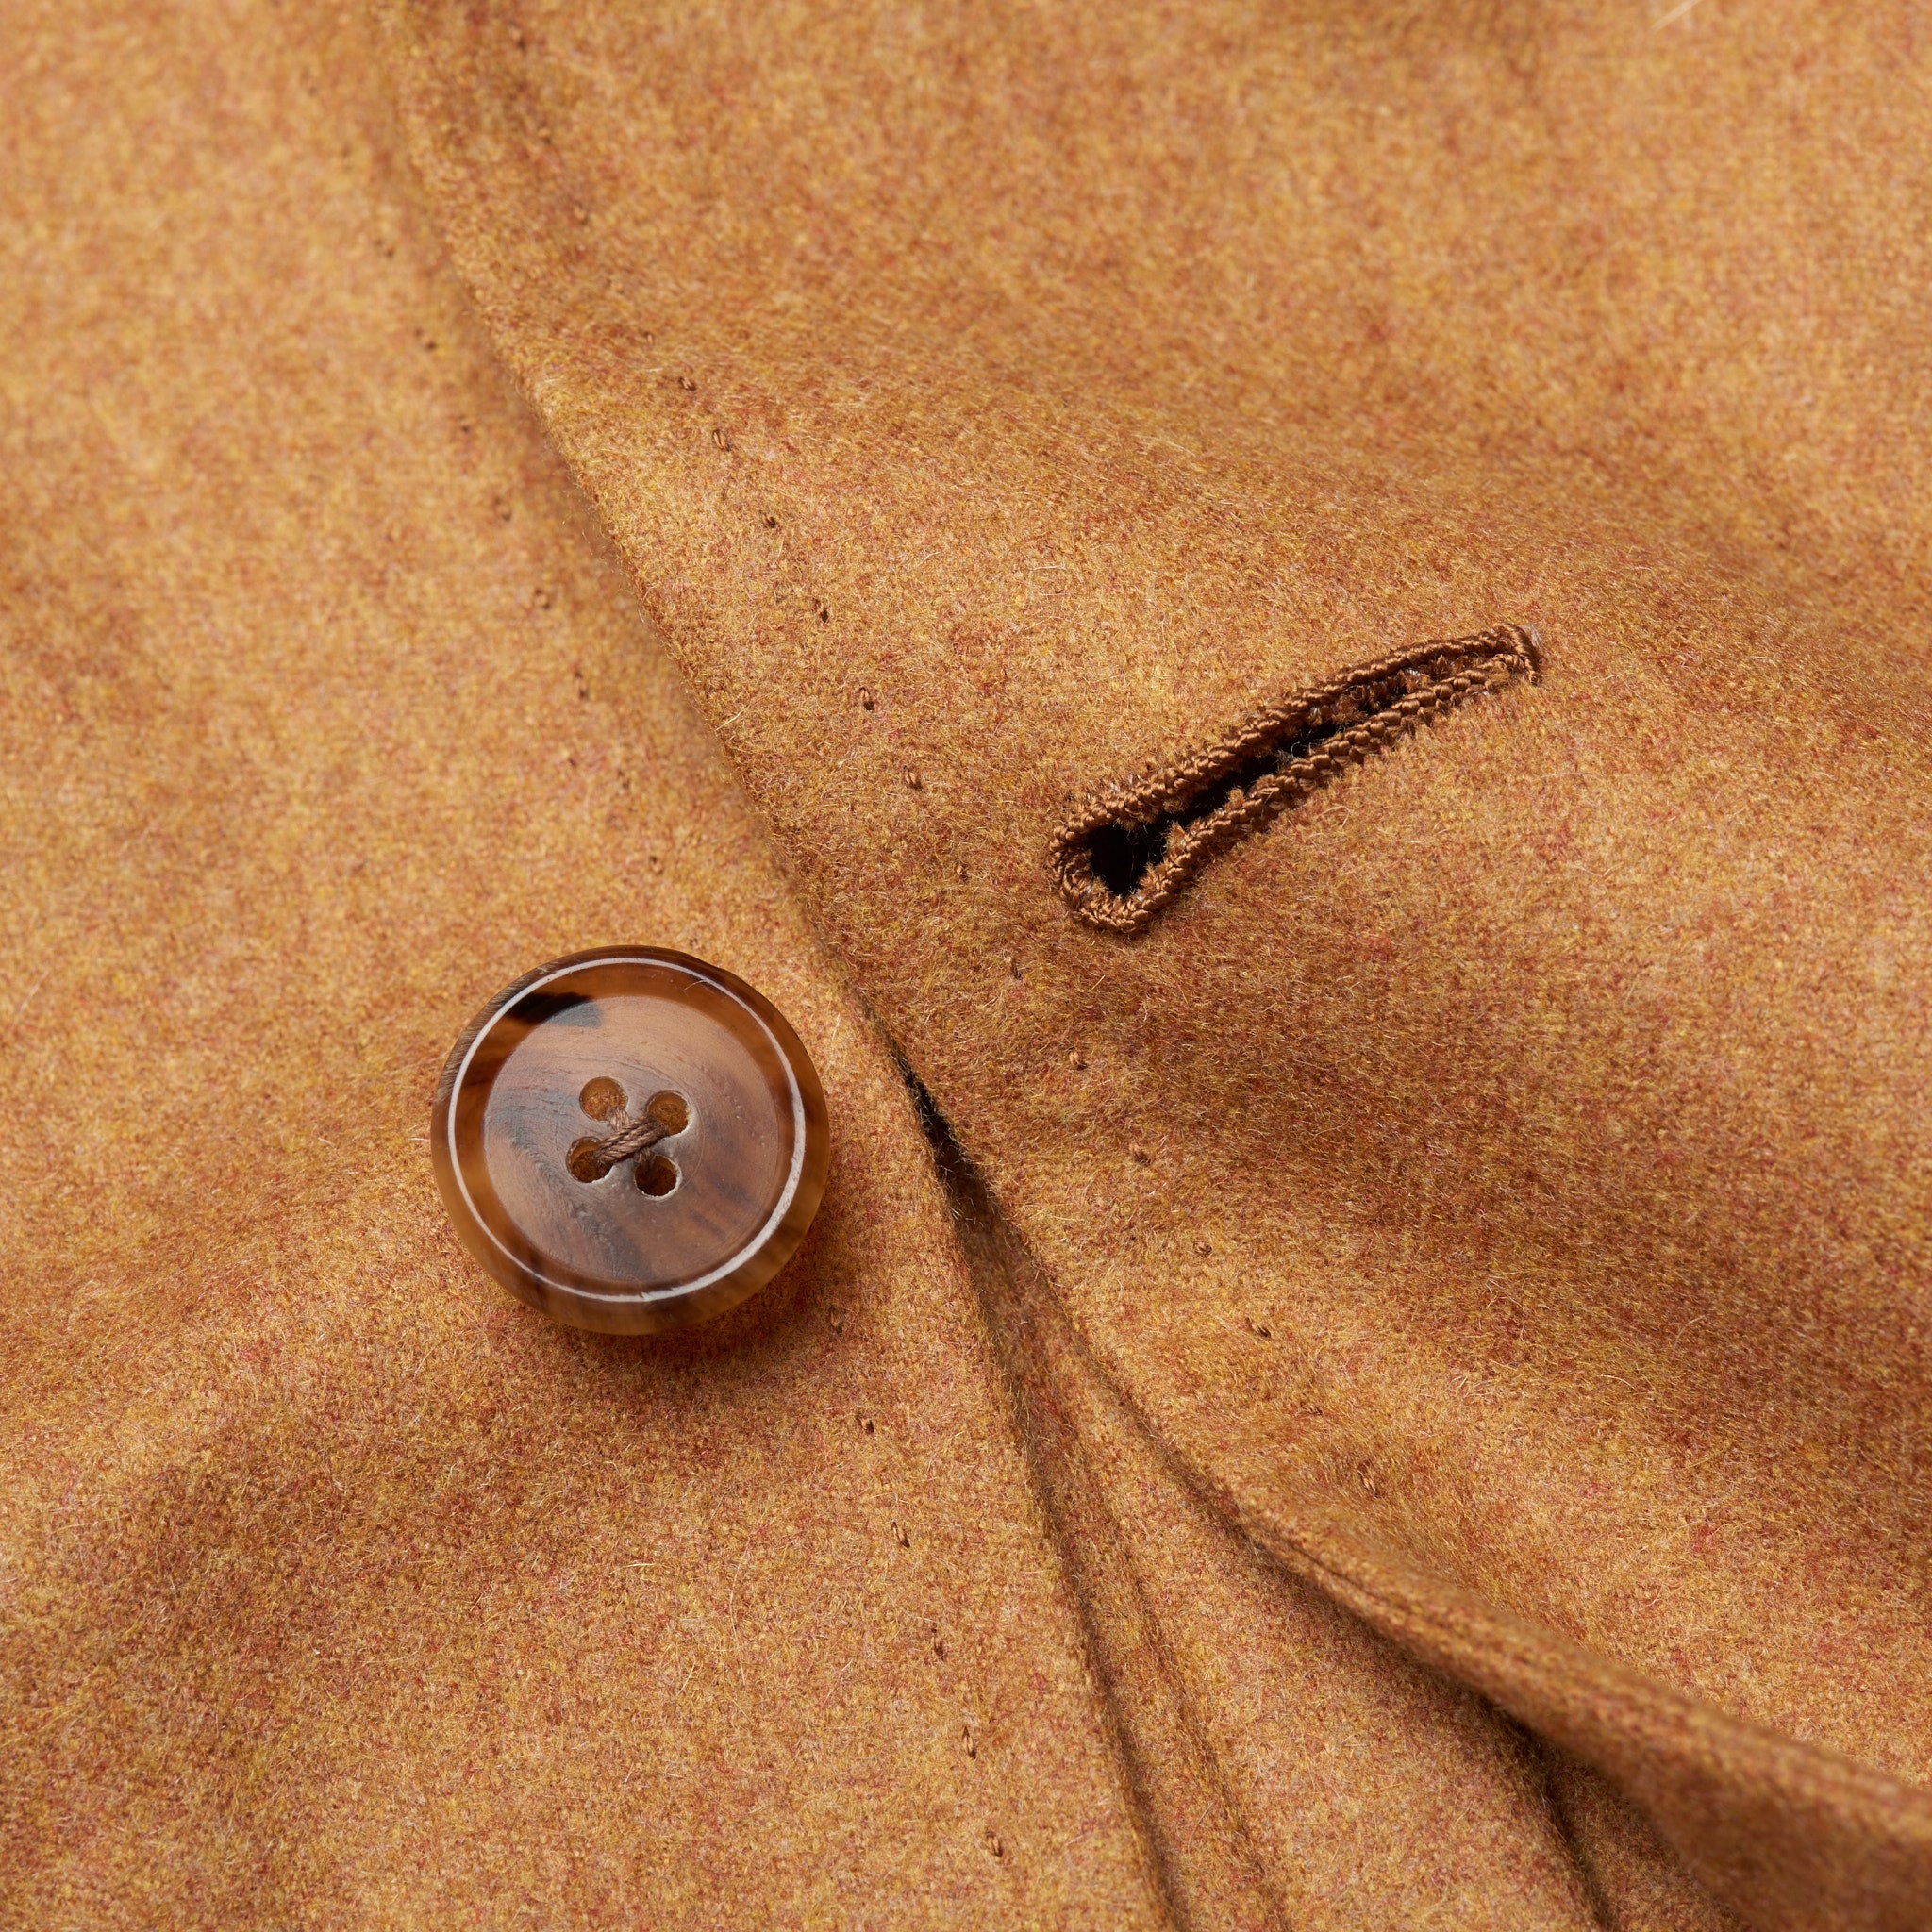 D'AVENZA Handmade Tan Cashmere Unlined Suit EU 50 NEW US 40